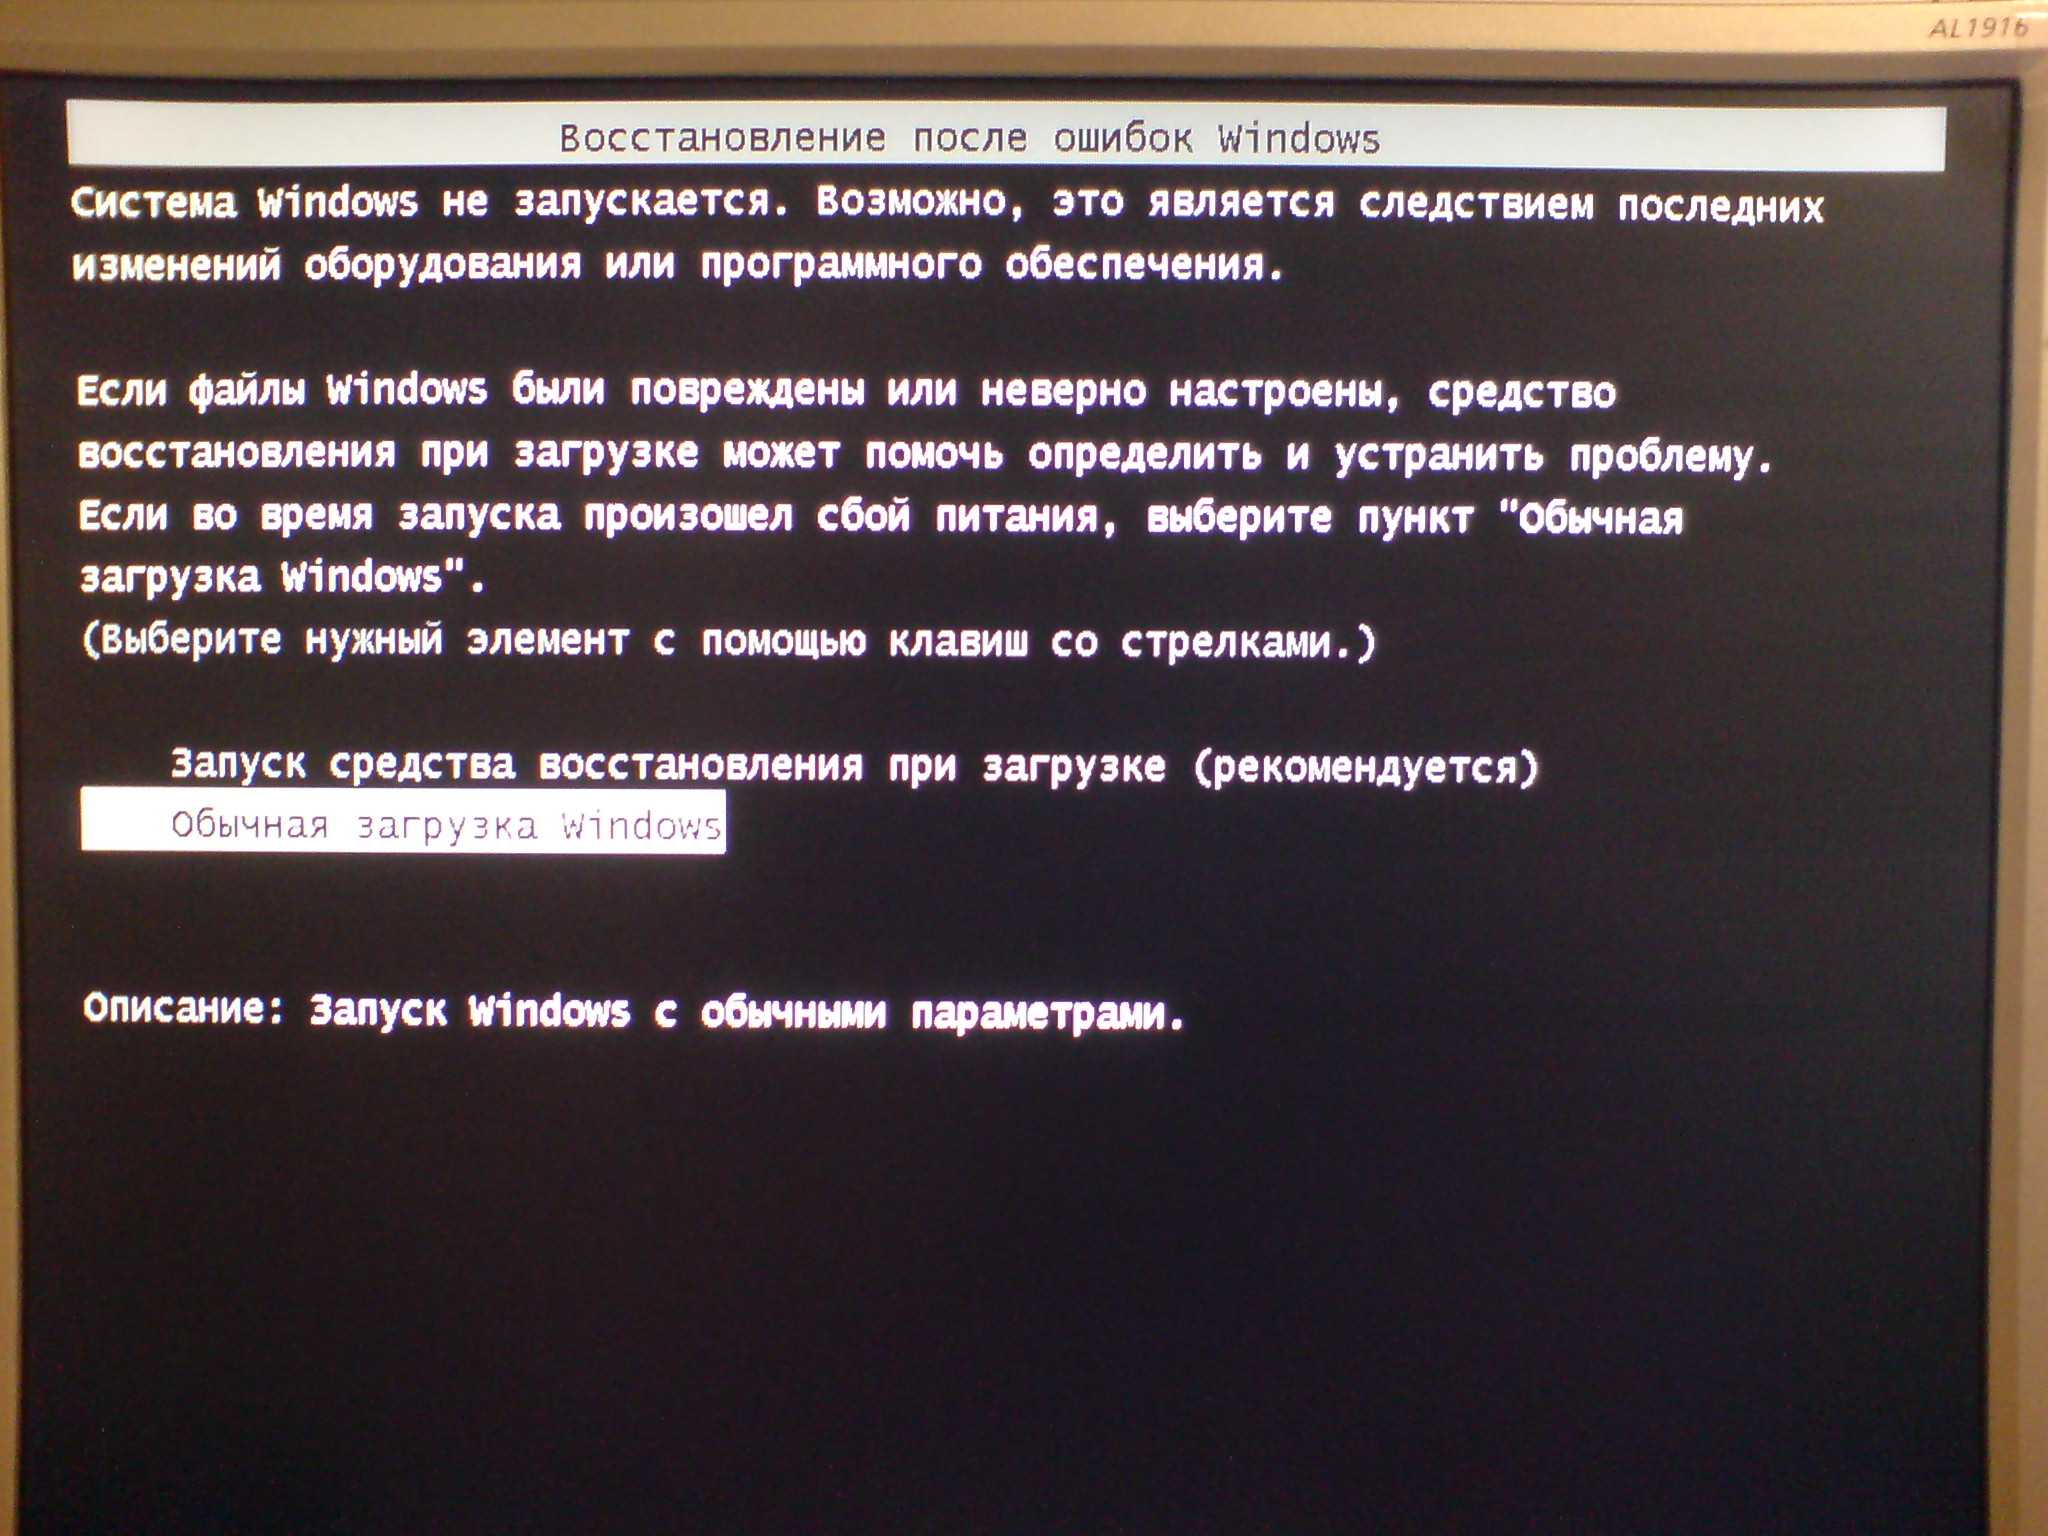 System thread exception not handled в windows 10